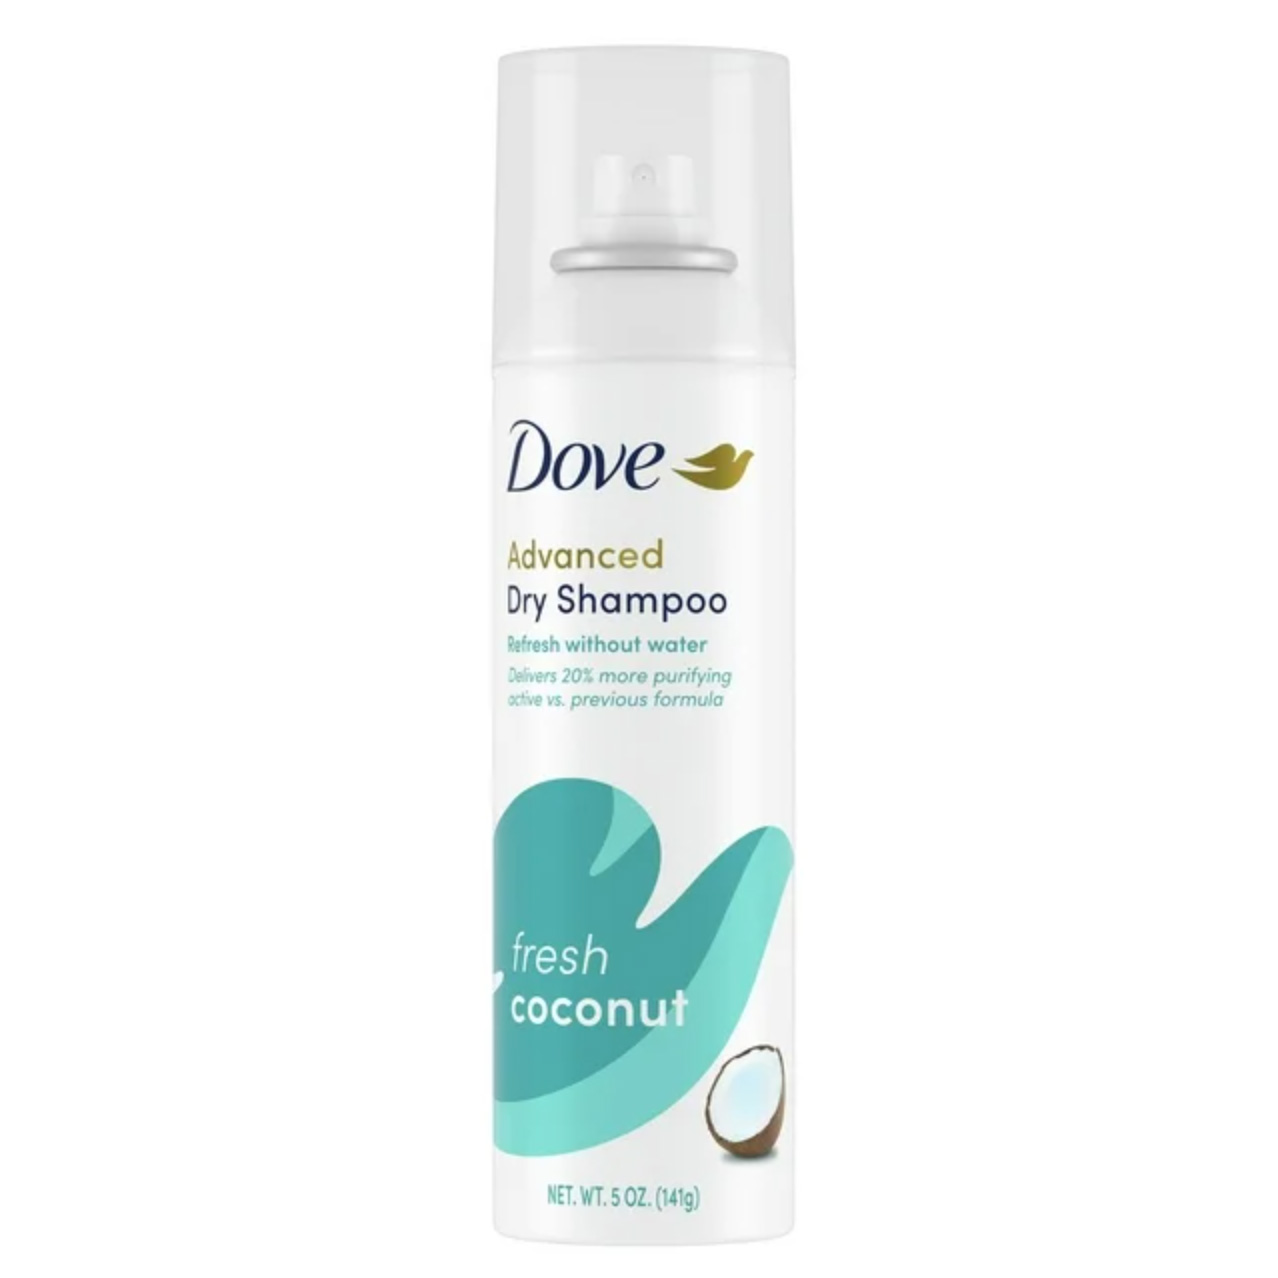 Dove Advanced Repairing Dry Shampoo in white bottle